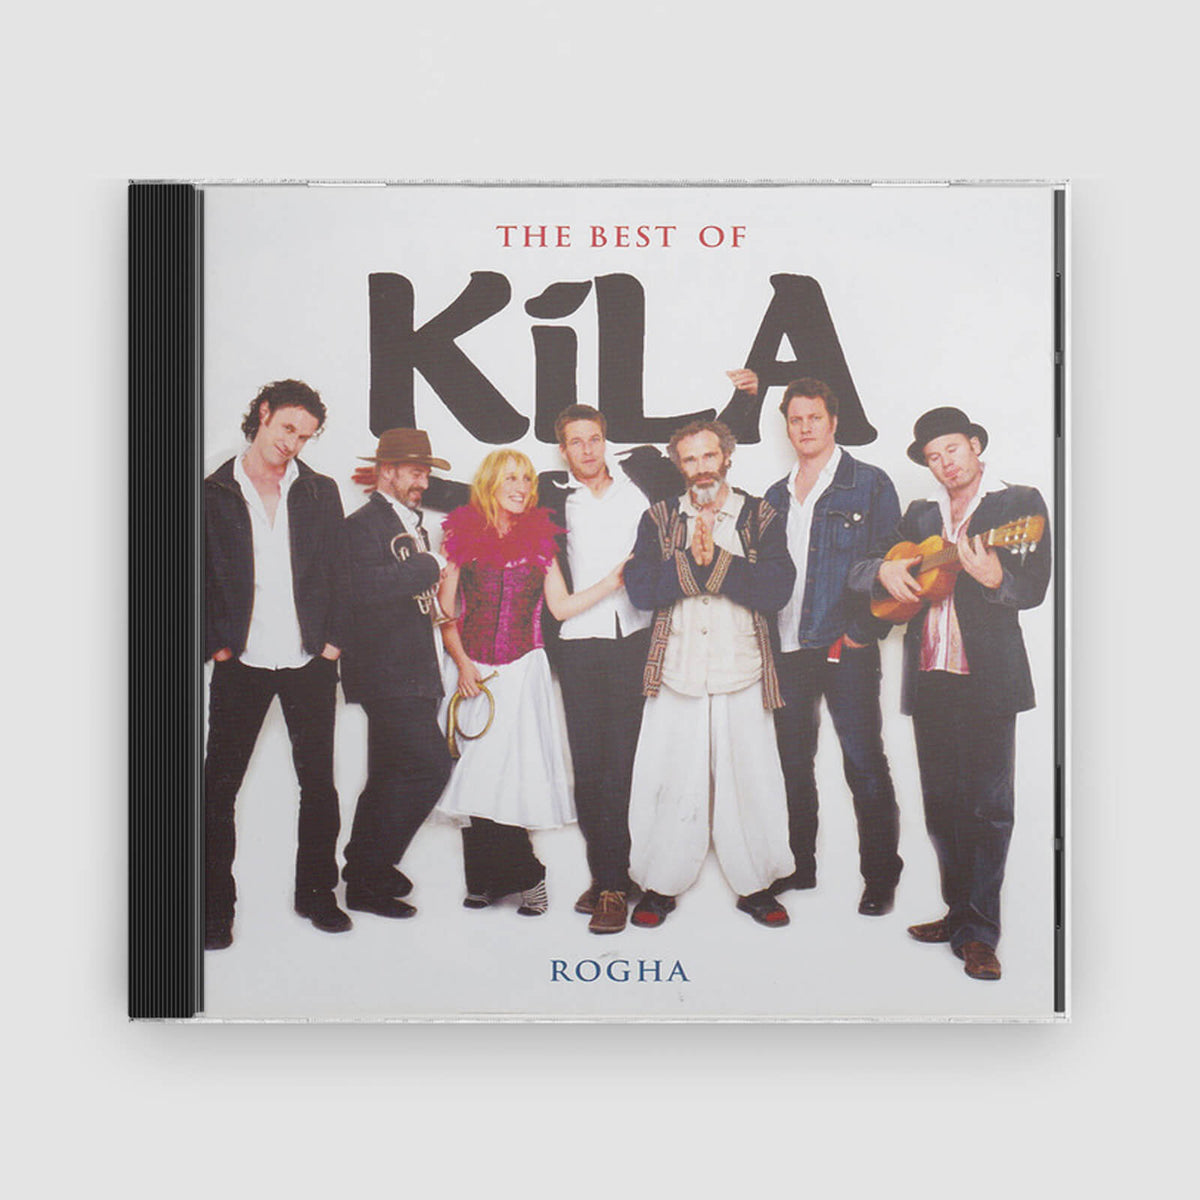 Kila : The Best of Kila (Rogha) (2CD)